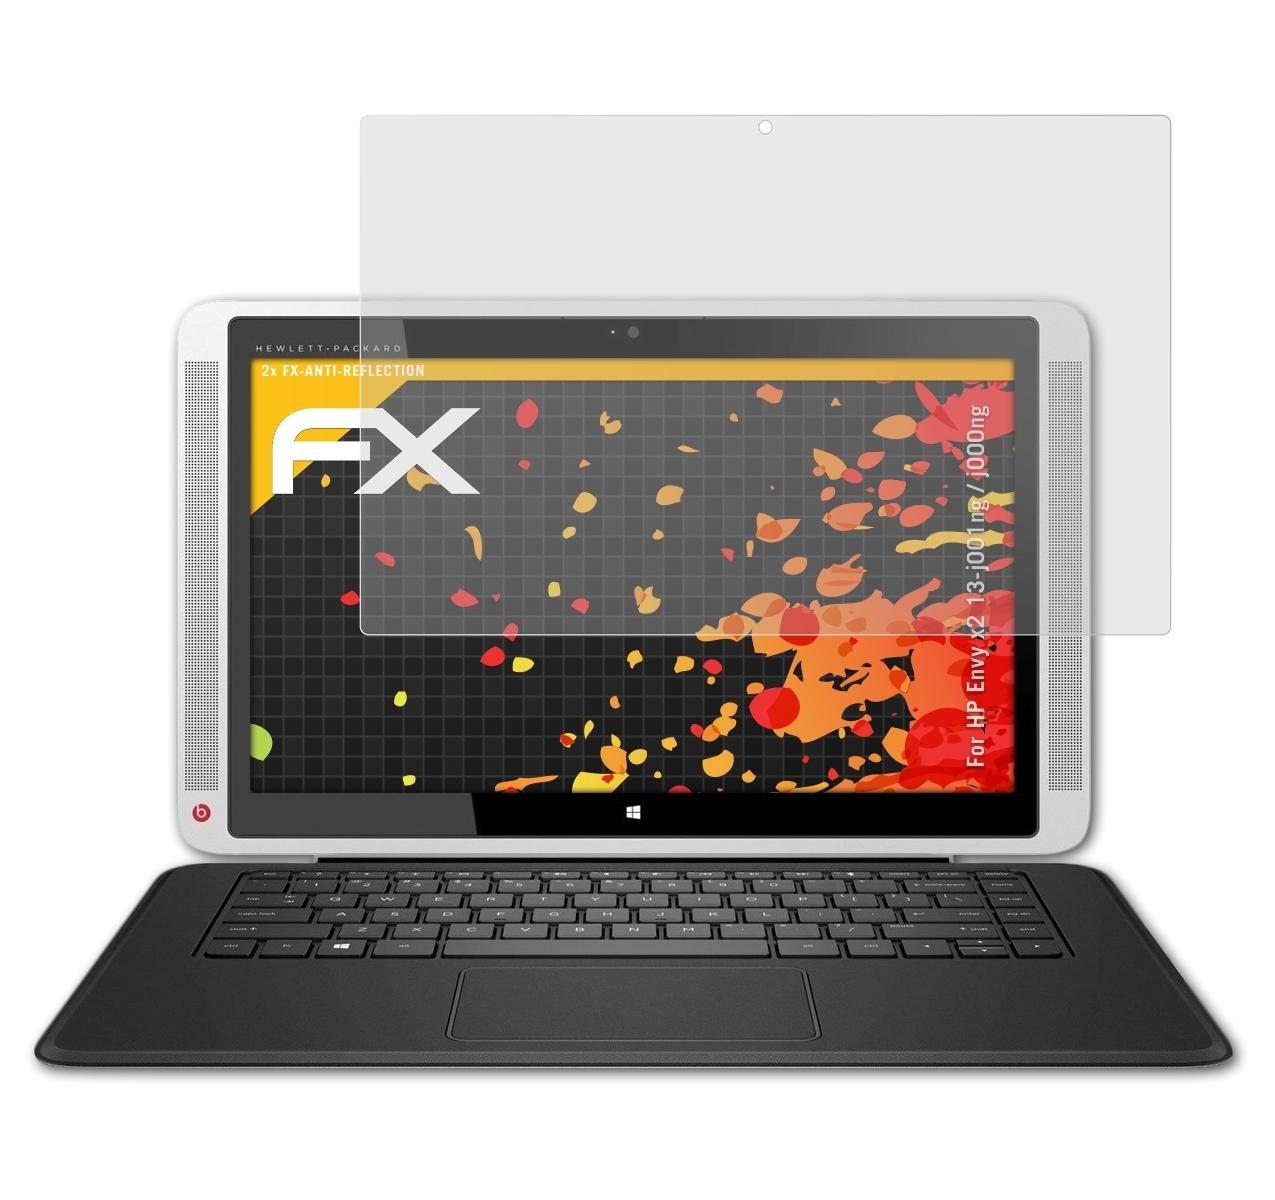 ATFOLIX 2x FX-Antireflex Displayschutz(für HP Envy / x2 j000ng) 13-j001ng